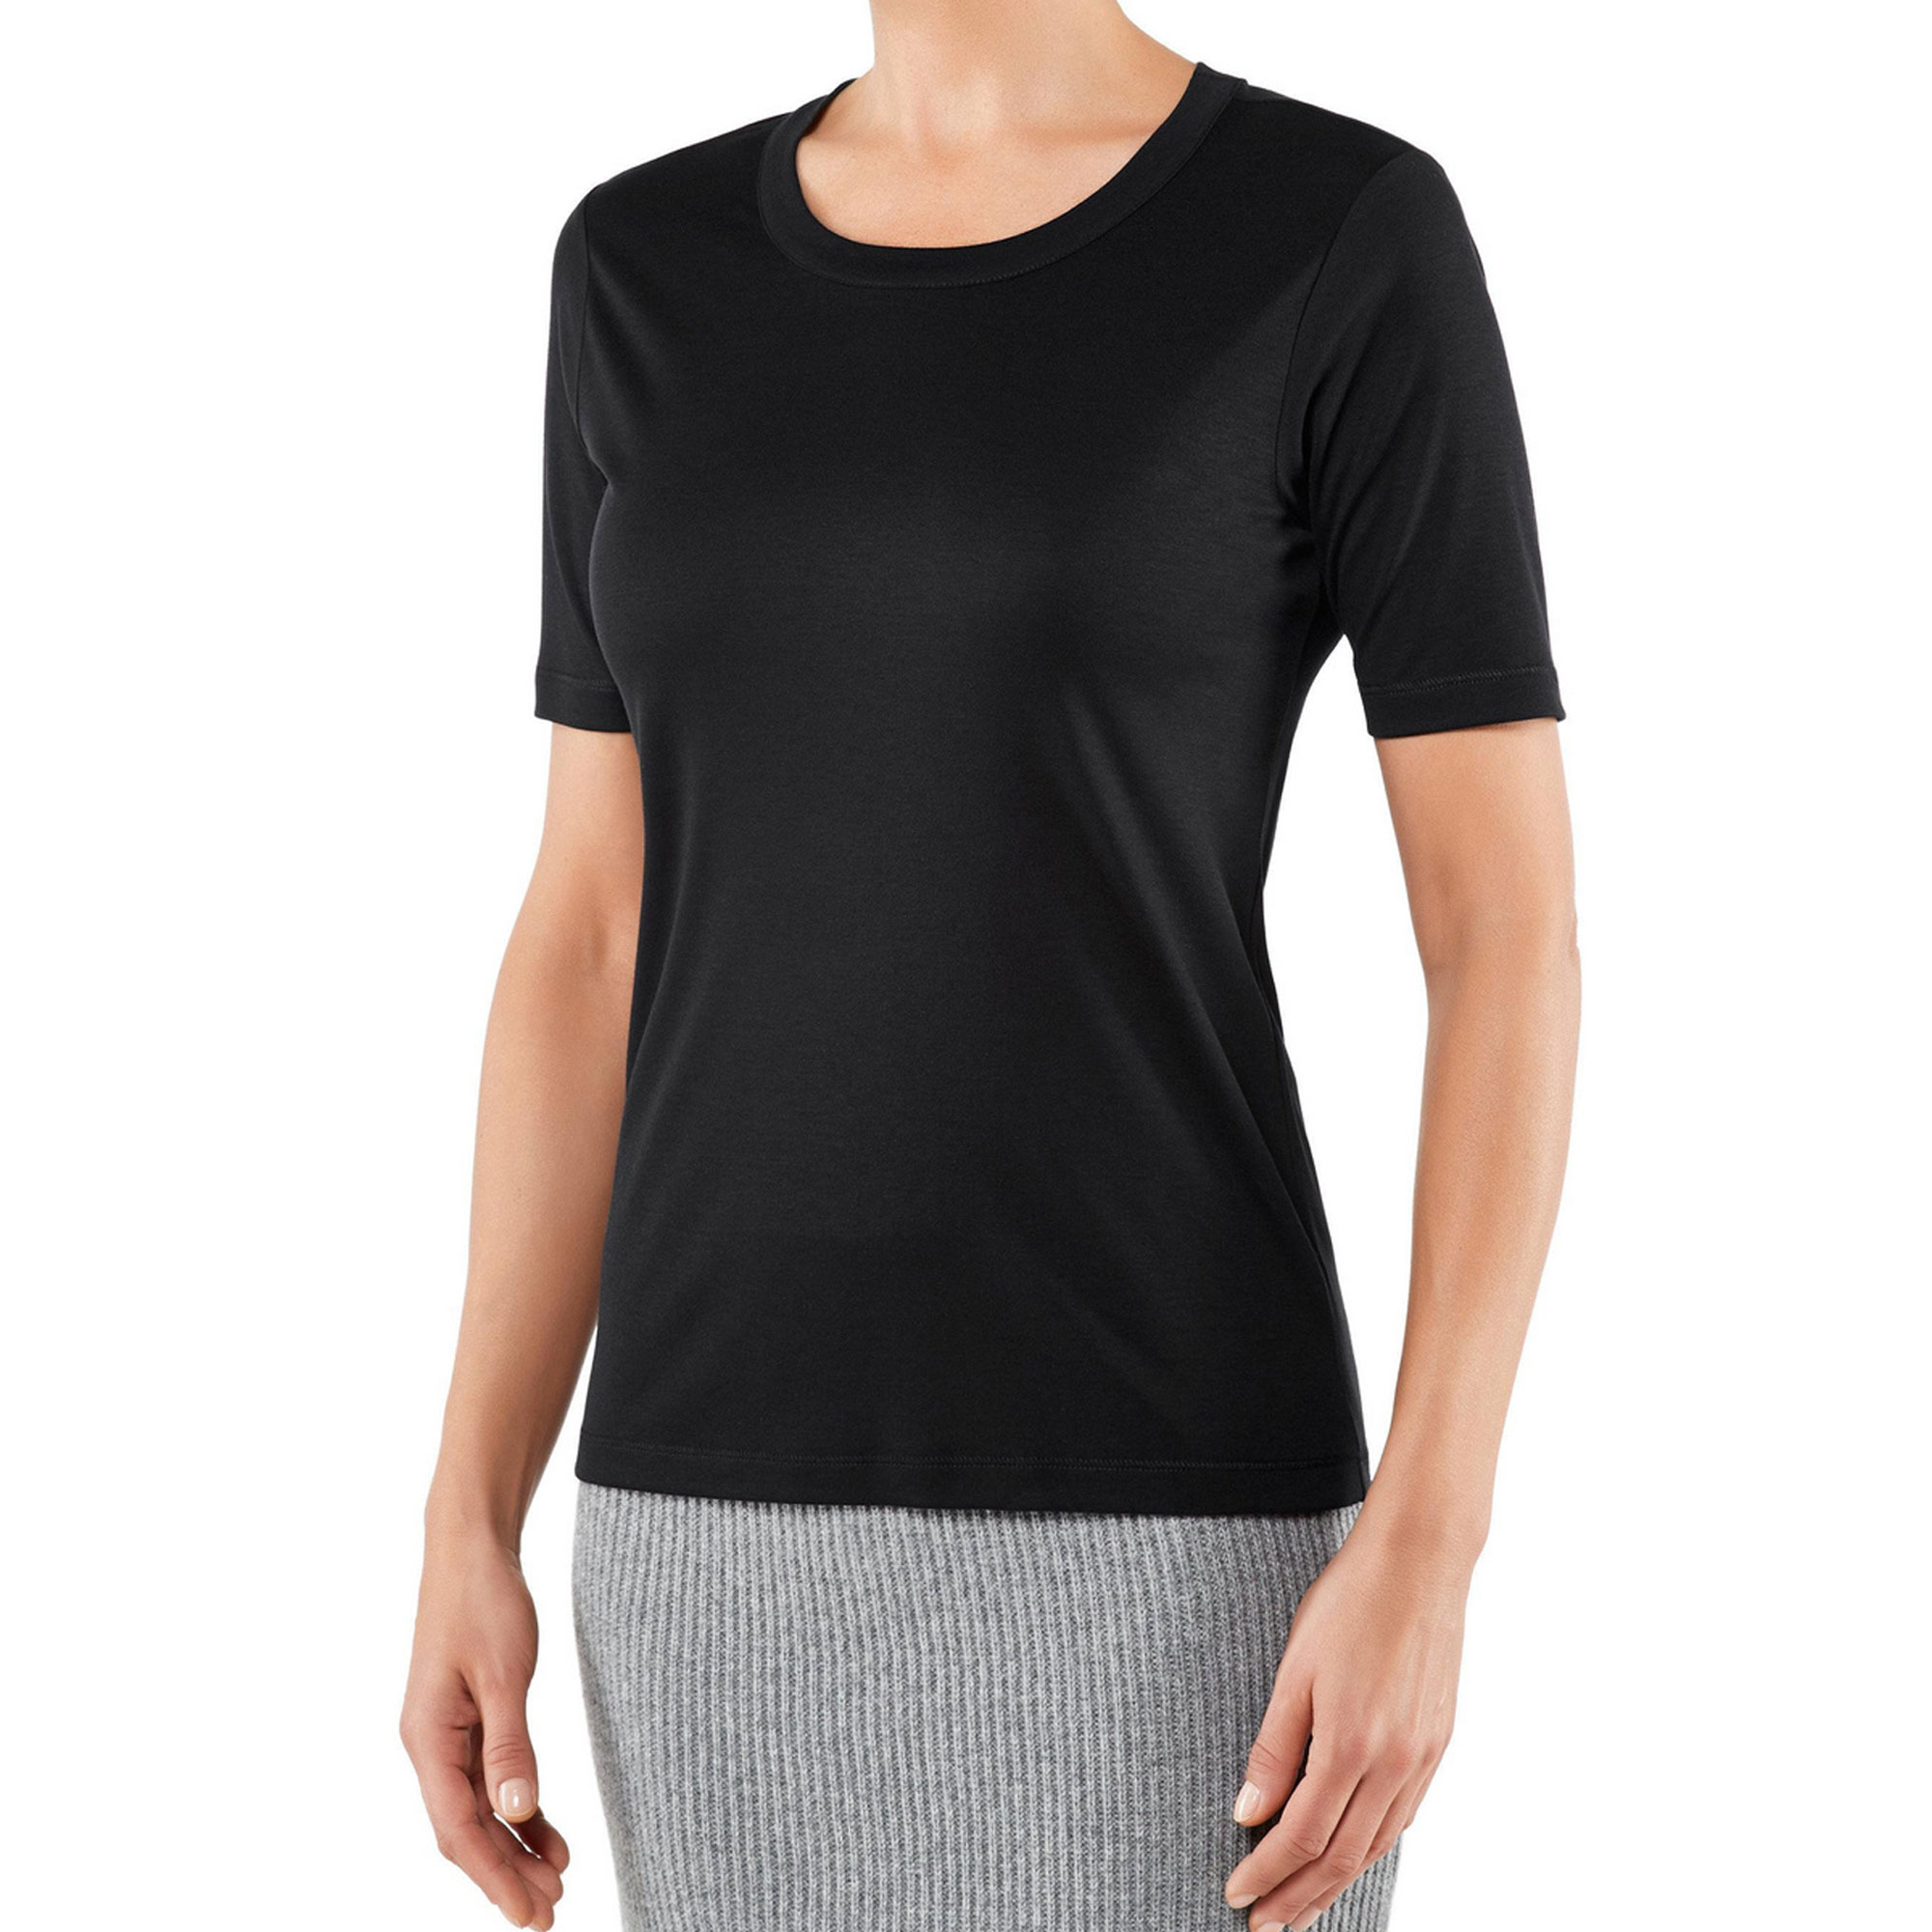 Wholesales high fashionable women cotton polyester t-shirts tee shirt